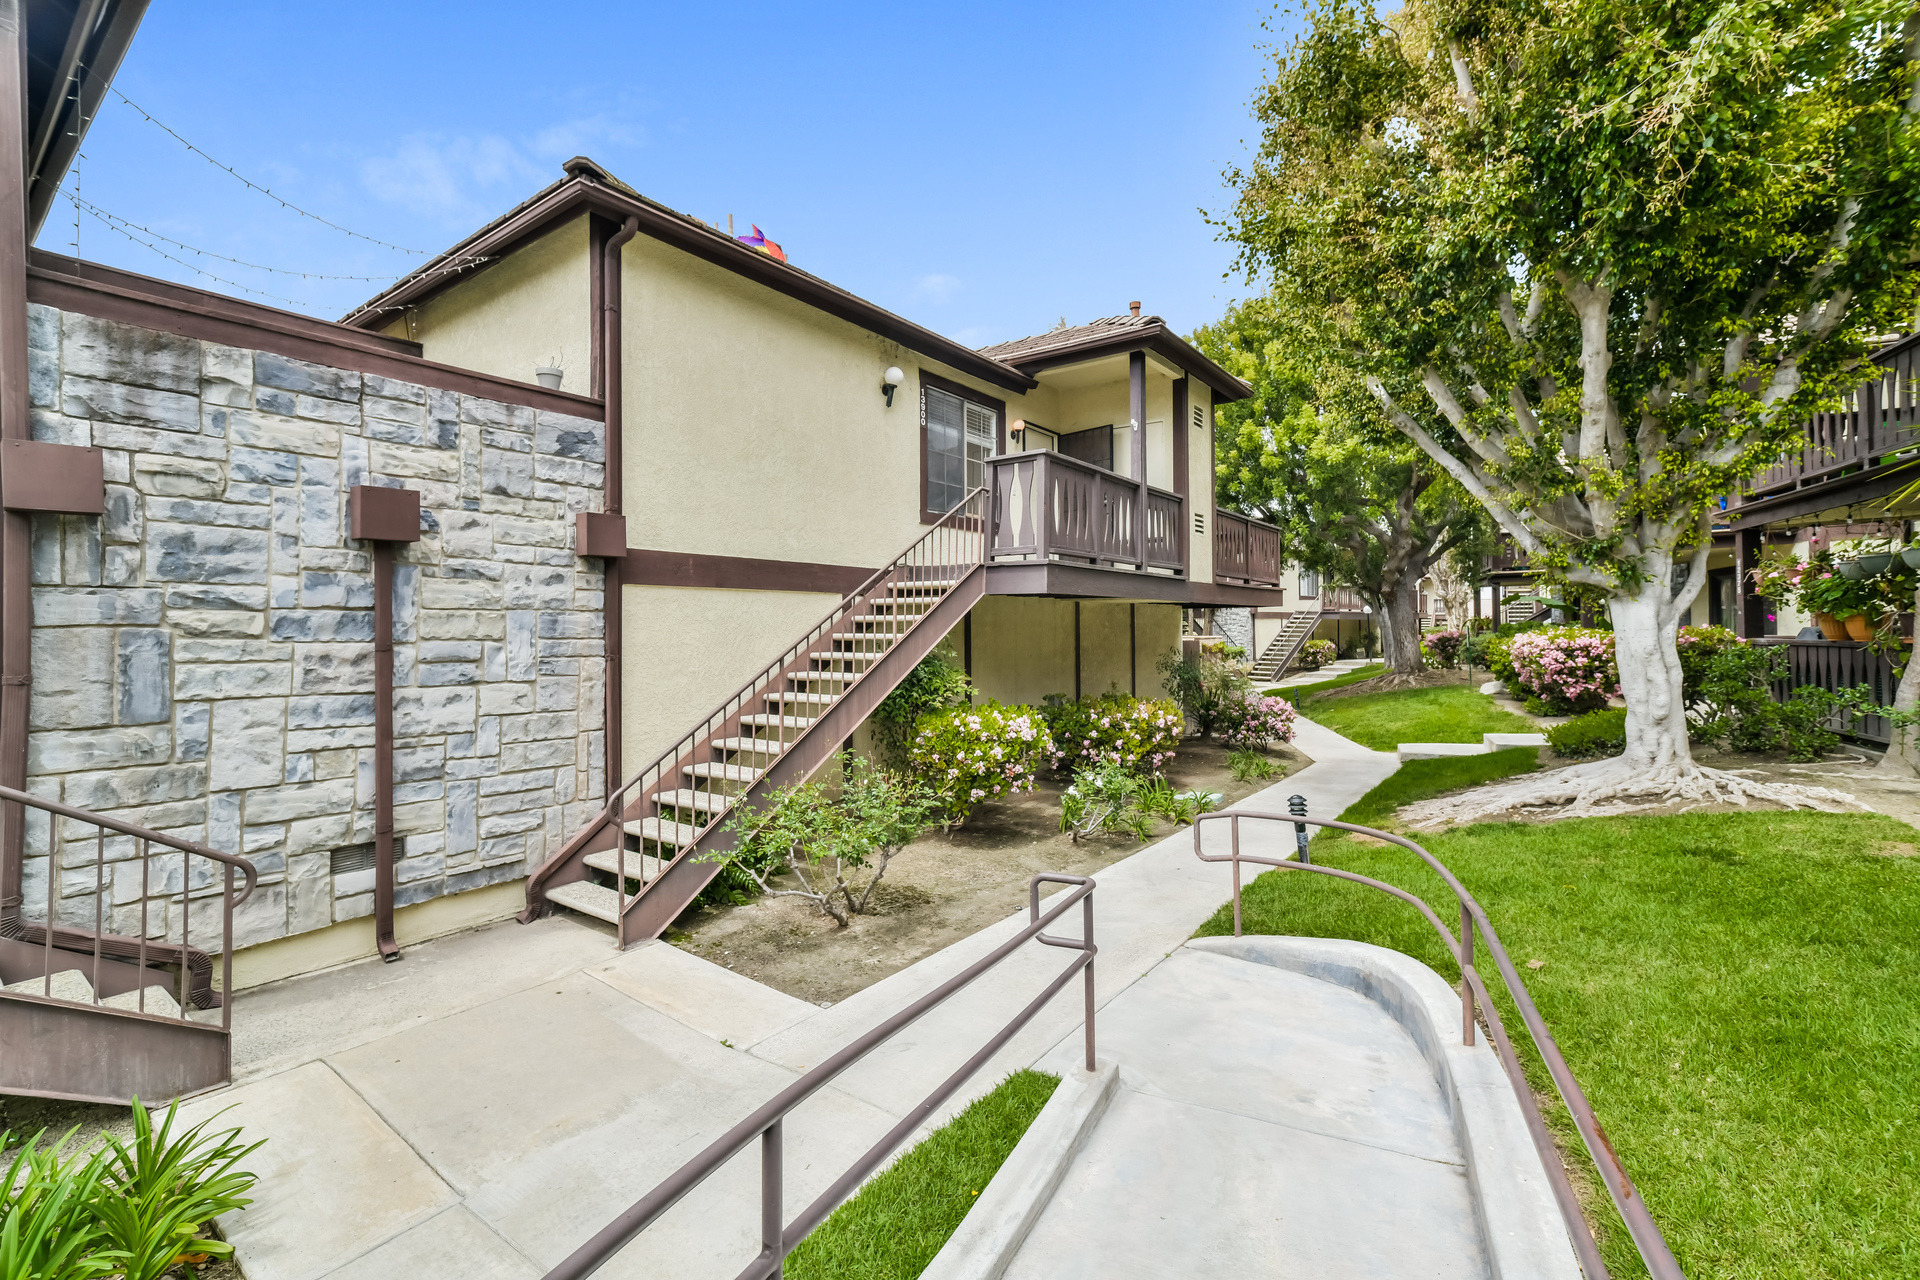 Beautiful Lakeland Village, CA house showcasing the best property management services